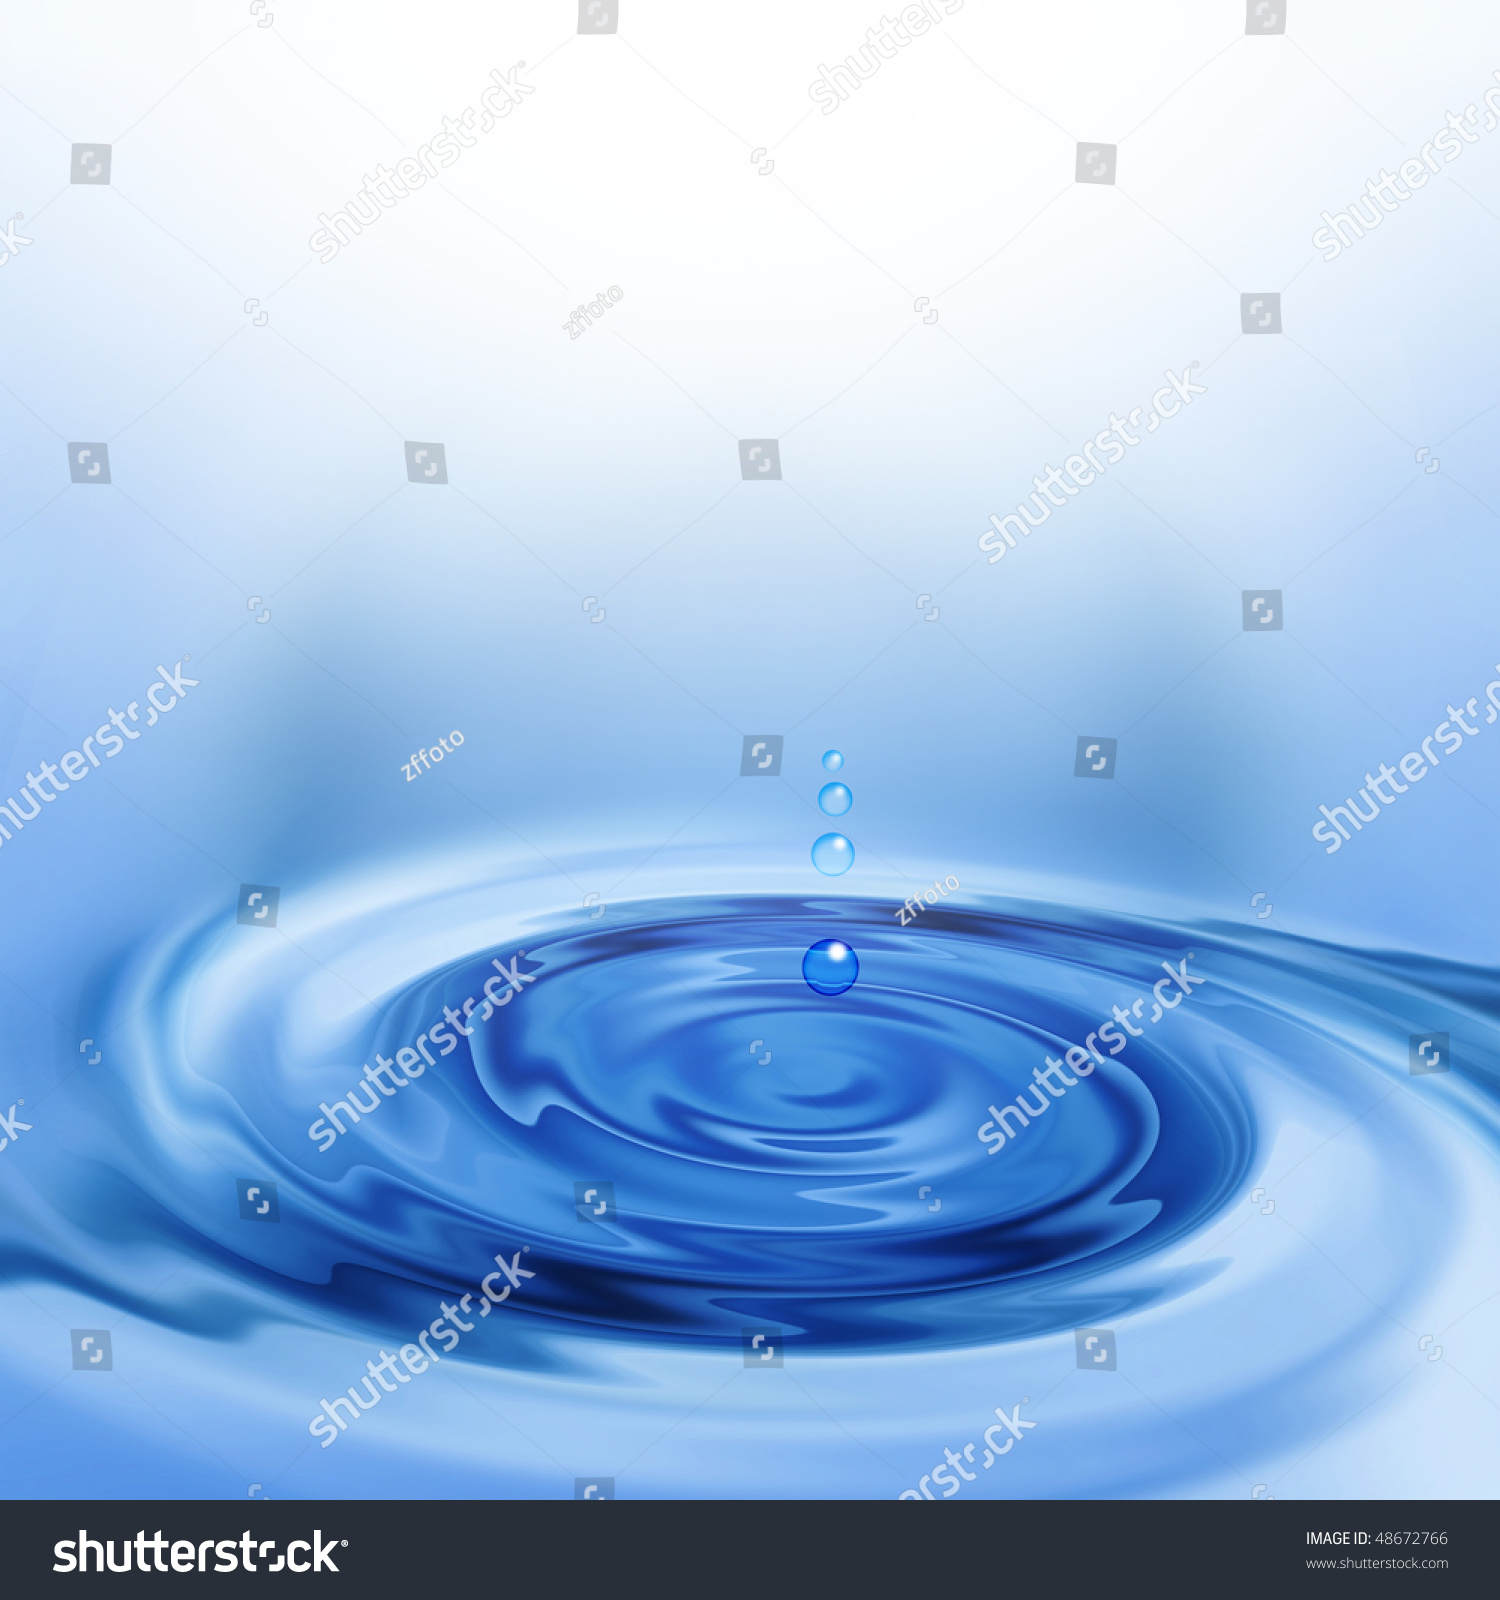 Falling Drops Water Stock Illustration 48672766 - Shutterstock